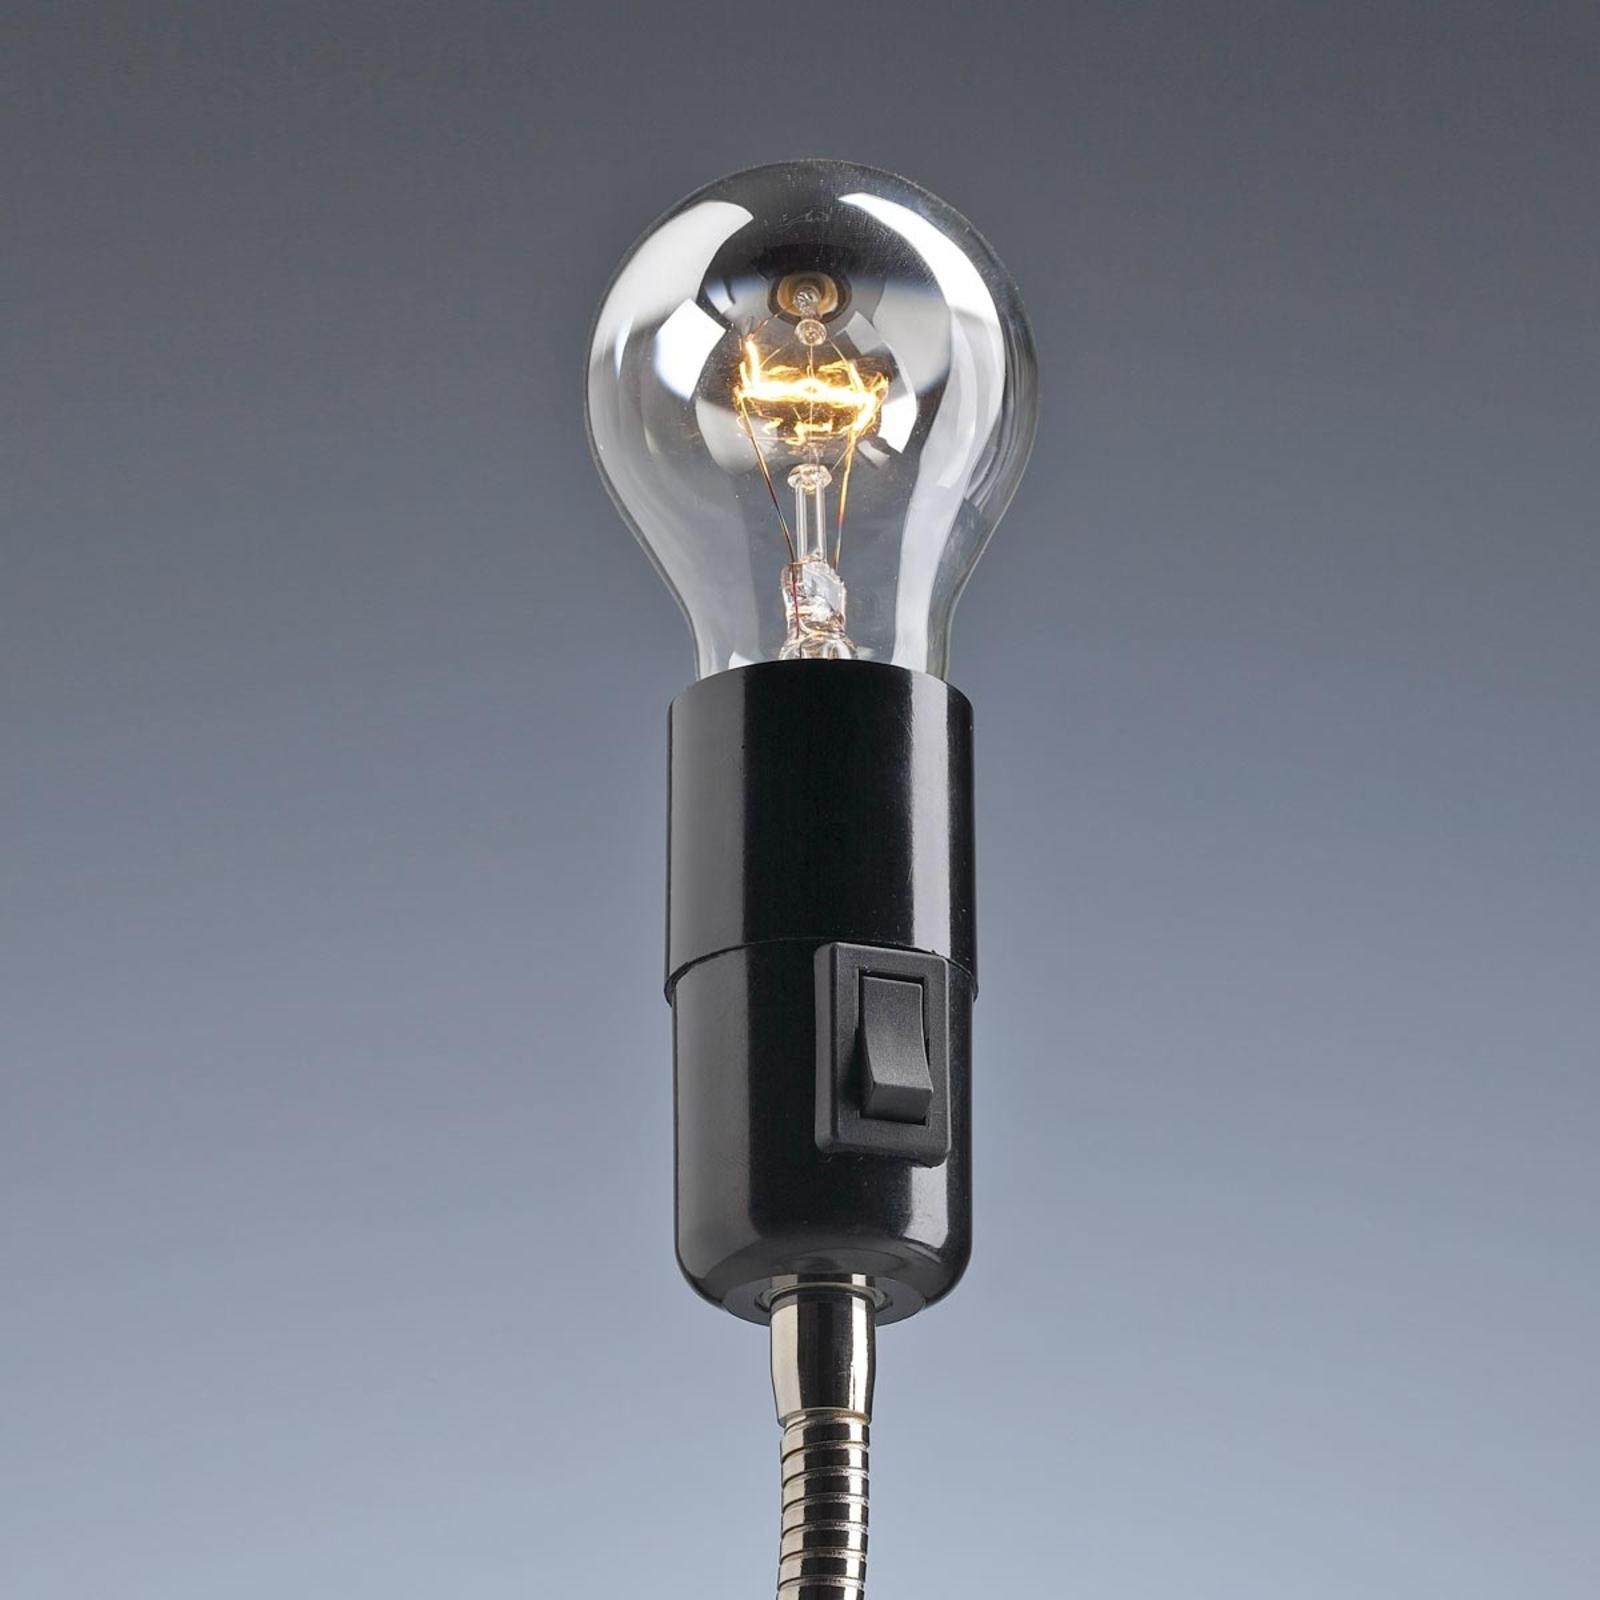 TECNOLUMEN Lightworm table lamp, nickel-plated